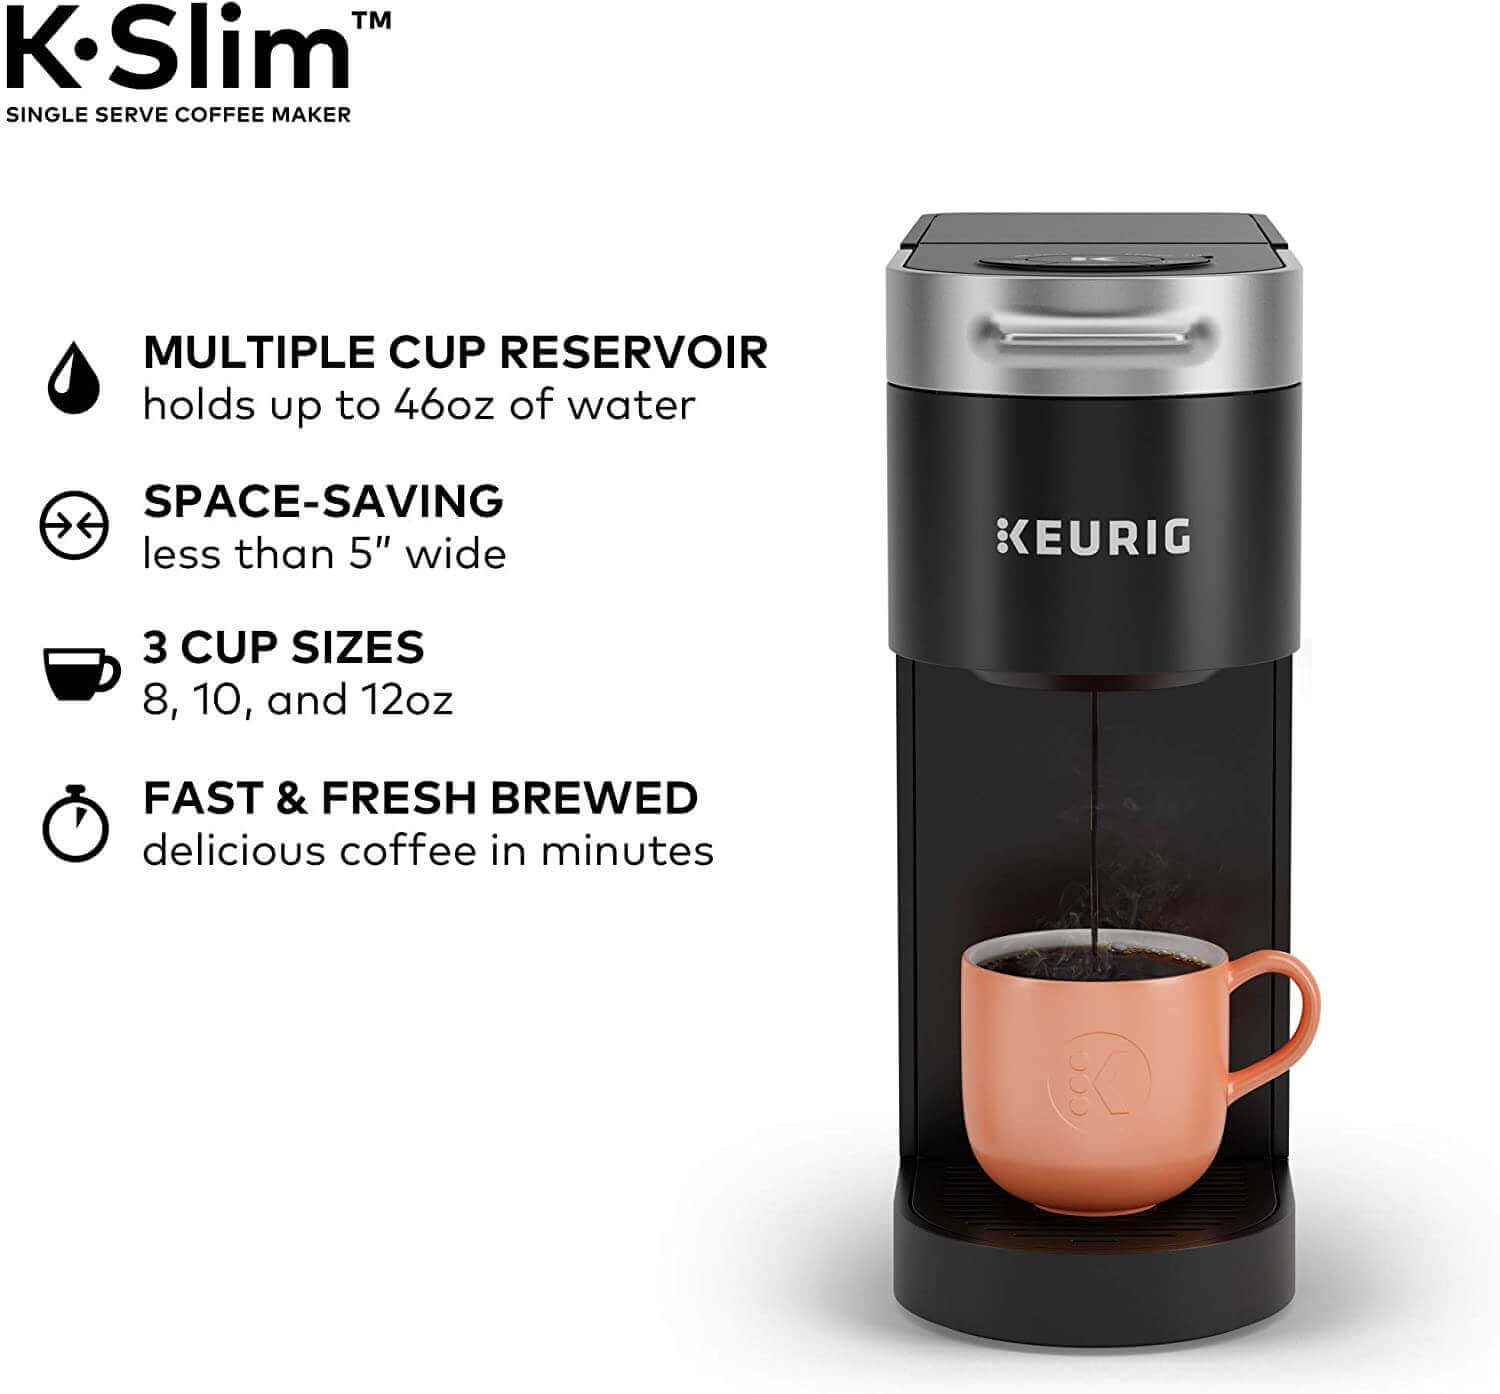 Keurig K- Slim Single-Serve K-Cup Pod Coffee Maker features